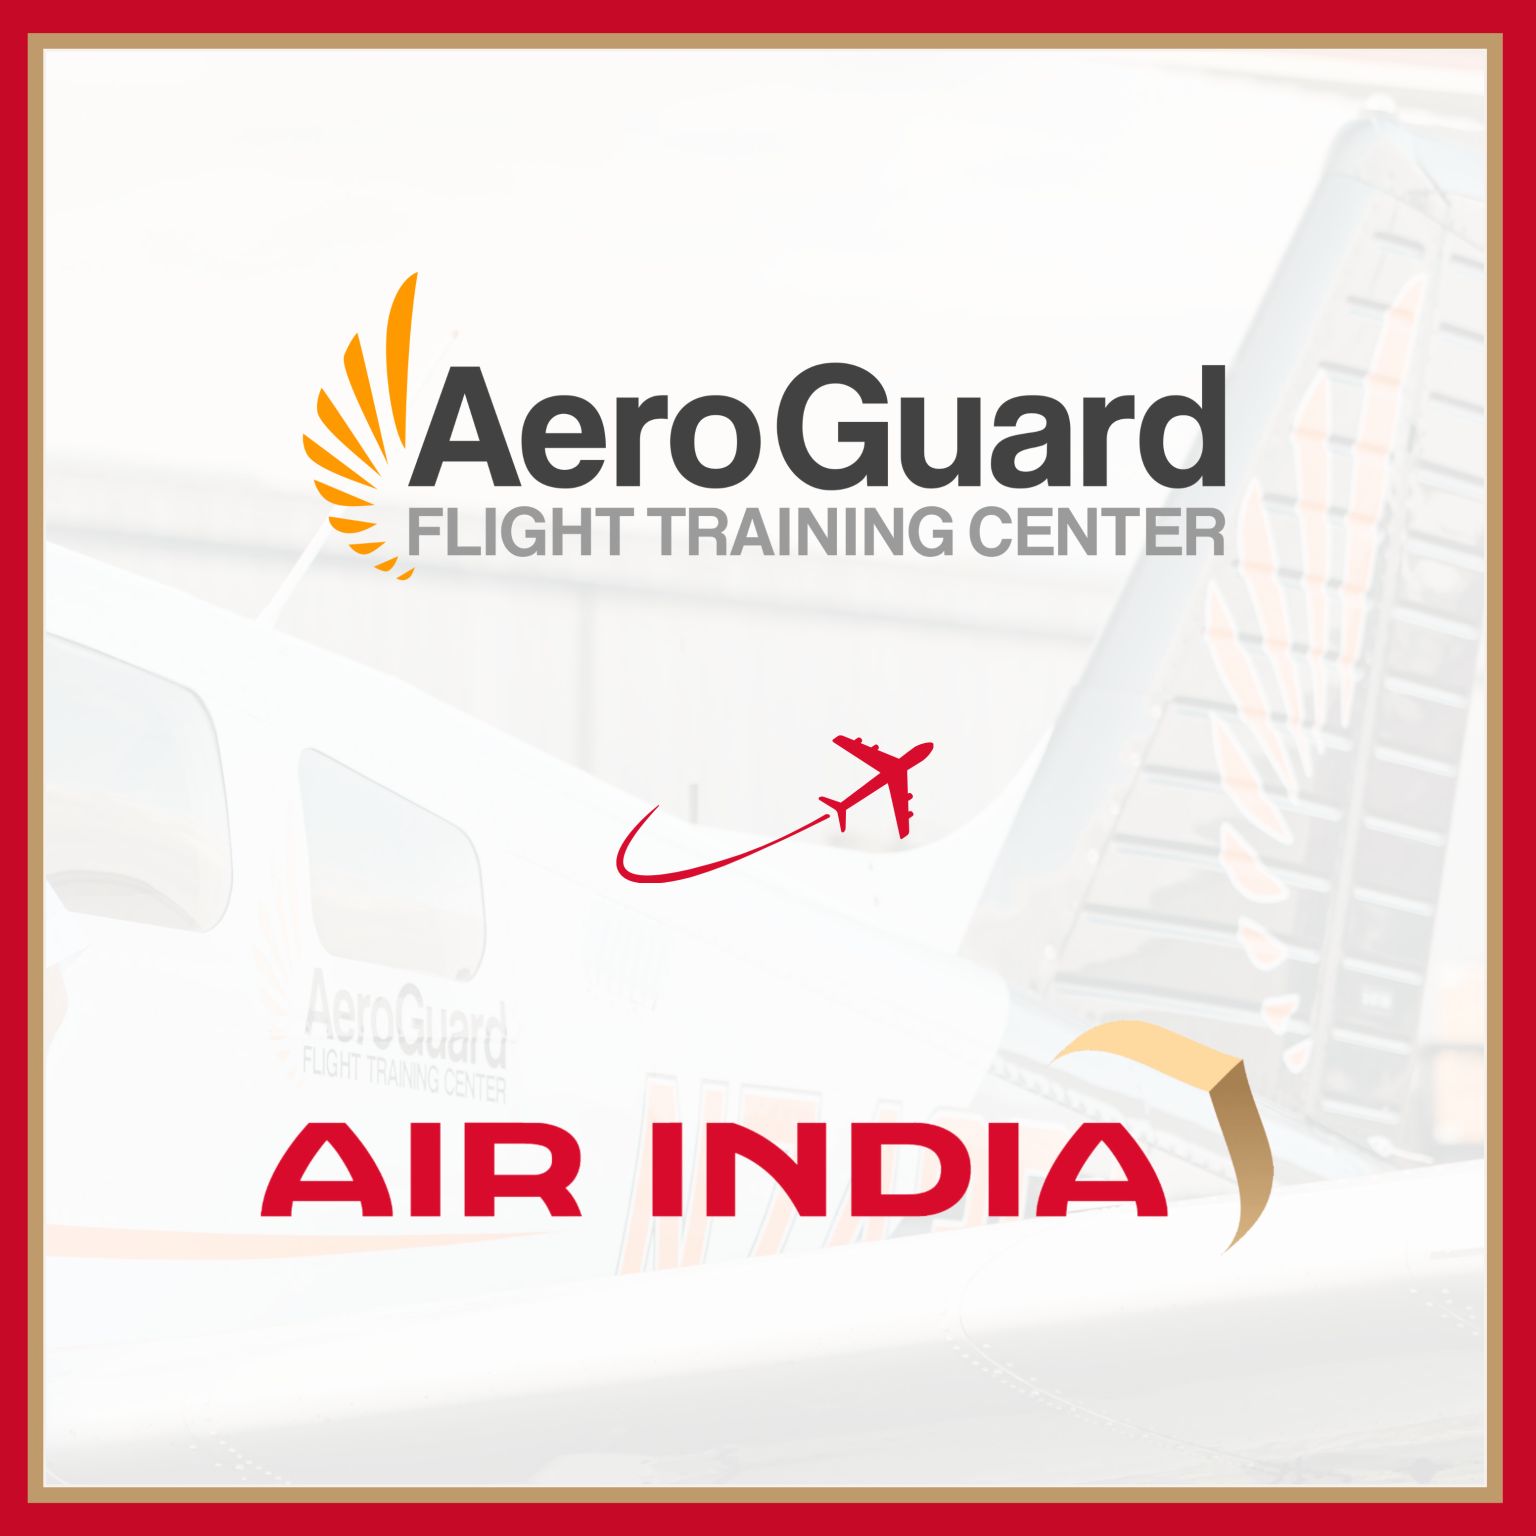 Aeroguard - Pilot Training AFM.aero